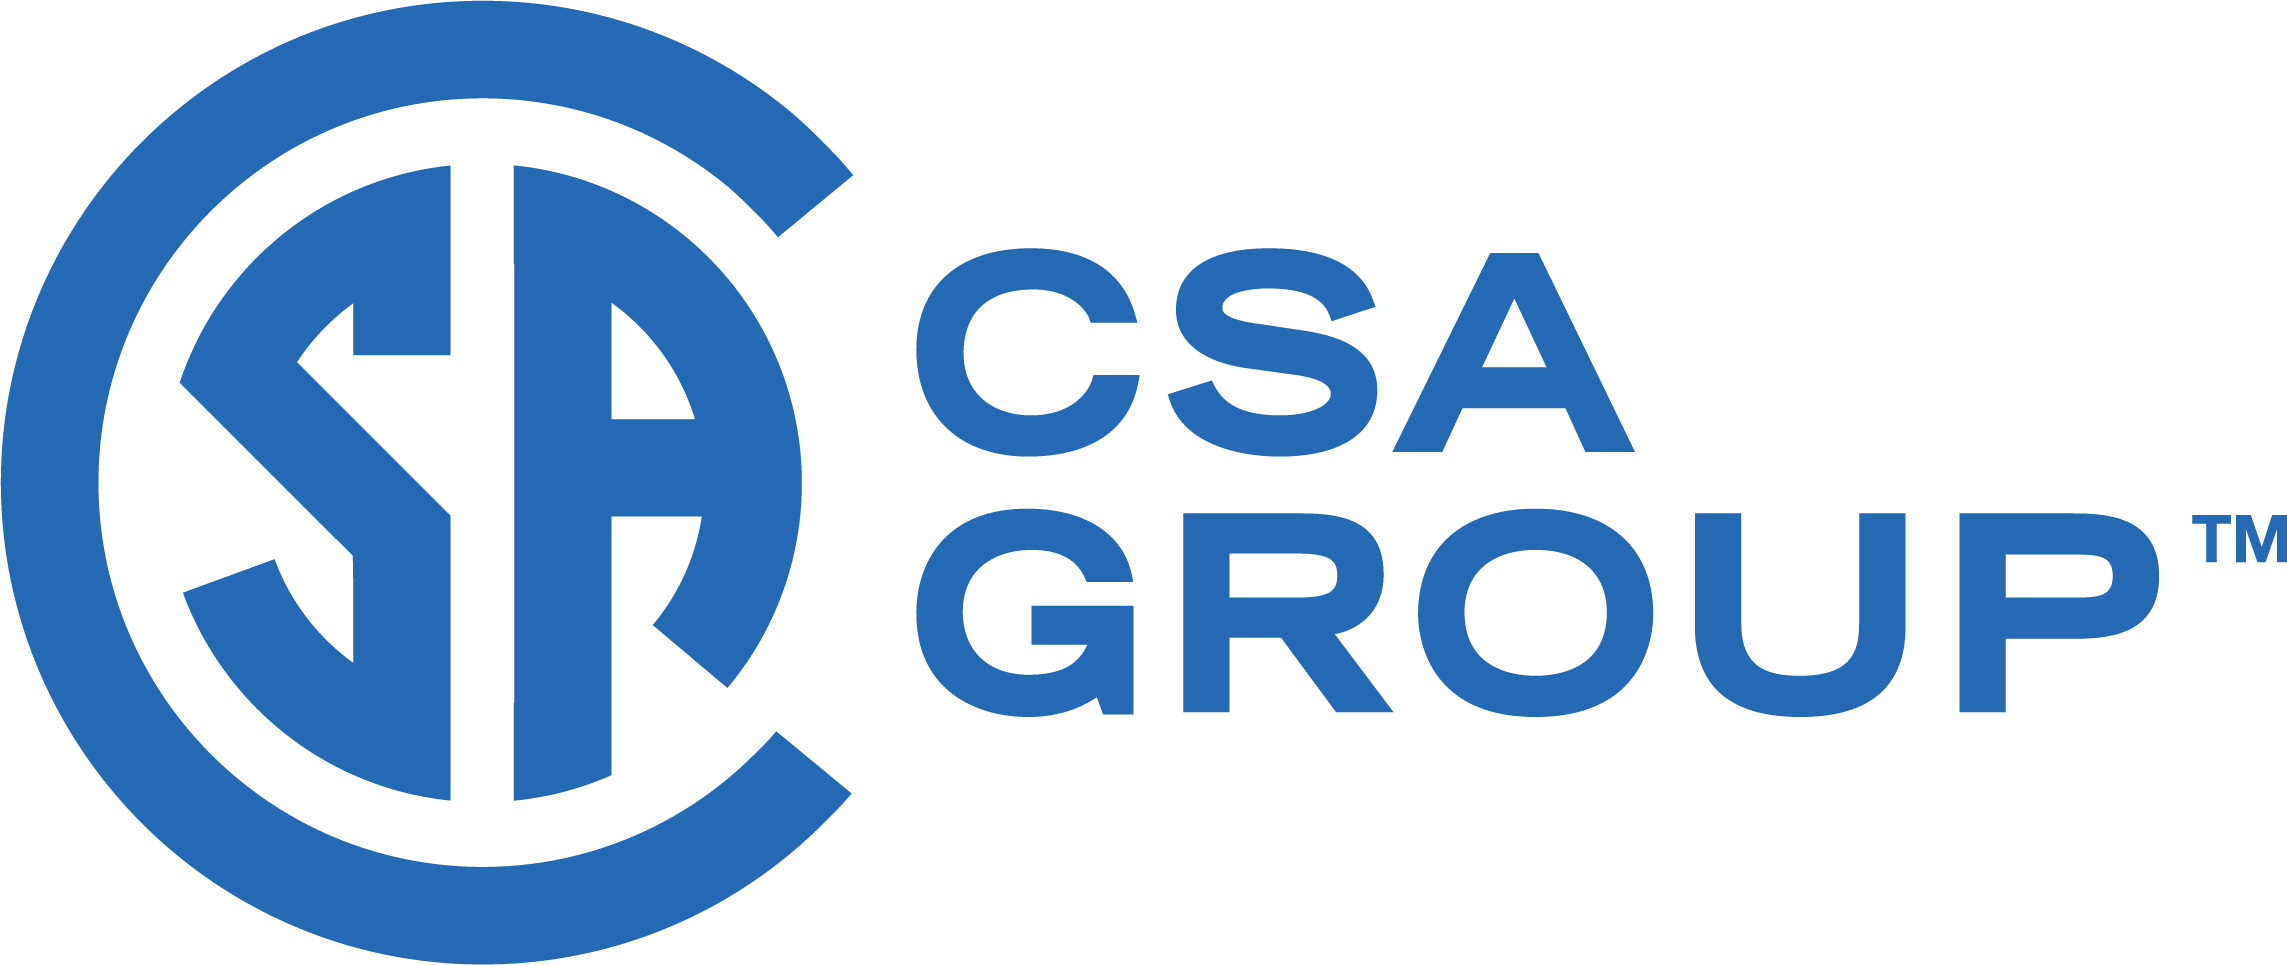 CSA Logo - CSA Marks and Labels for North America | CSA Group